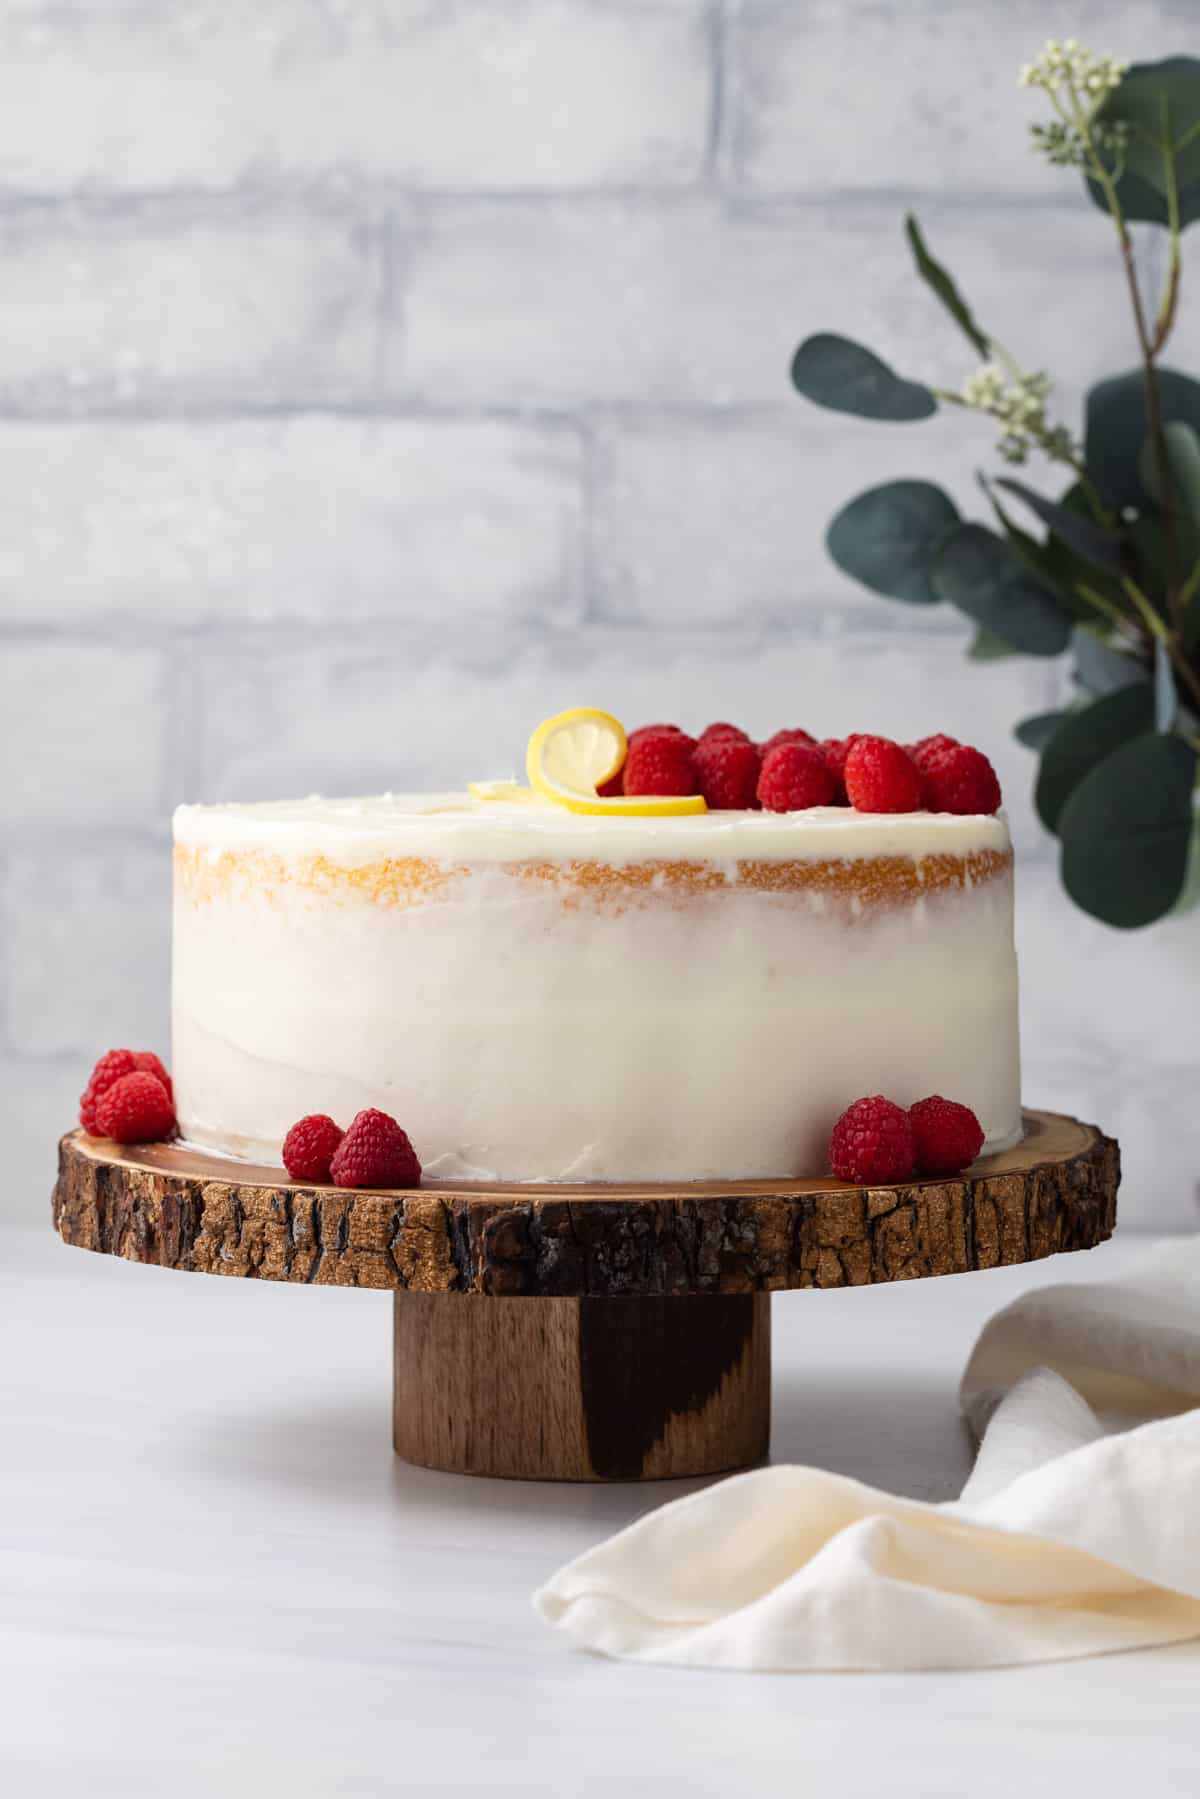 Lemon raspberry cake on a serving stand with fresh raspberries